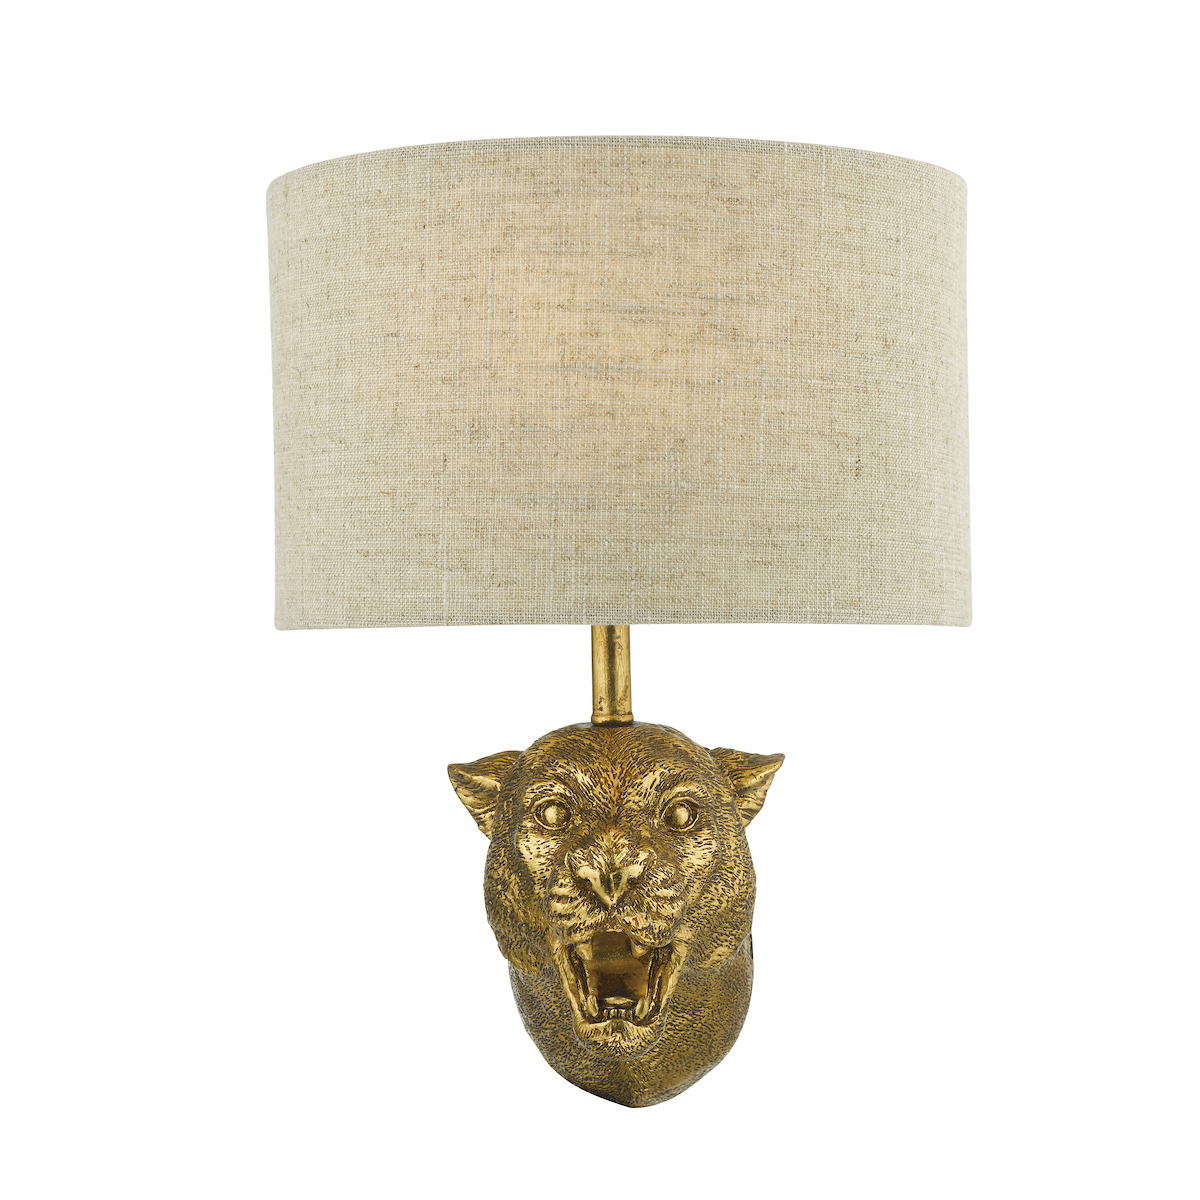 Dar Lighting RUR0735 Ruri Leopard Wall Light In Gold Finish With Natural Linen Shade